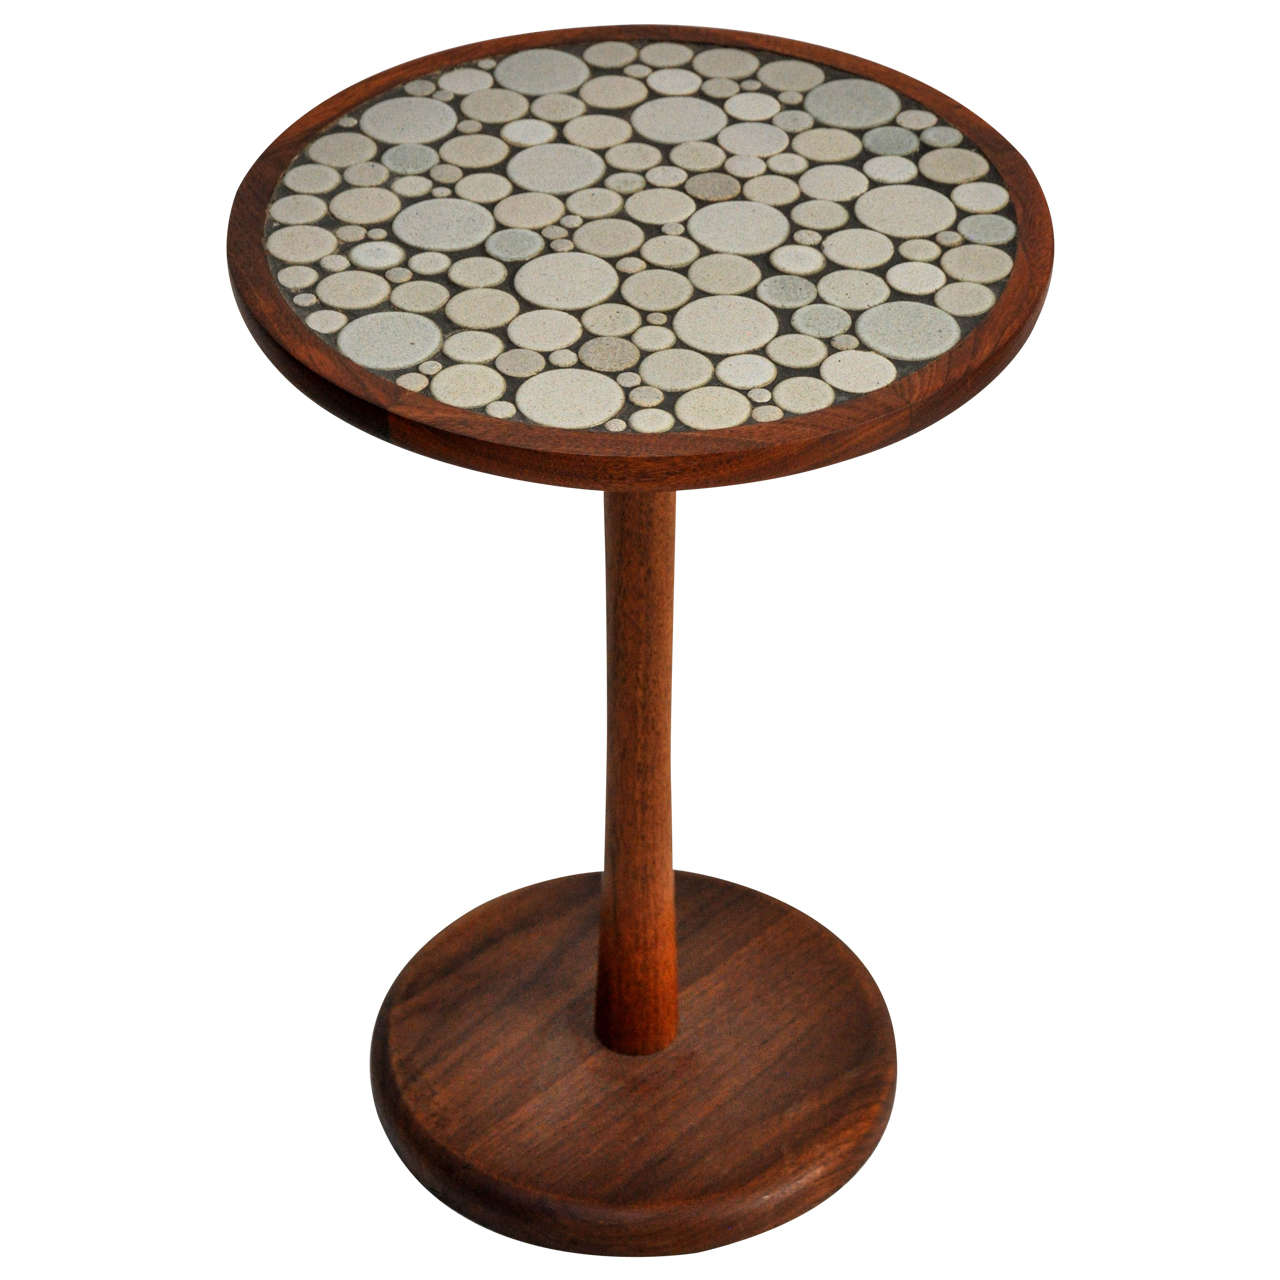 Ceramic Tile-Top Round Side Table by Gordon Martz